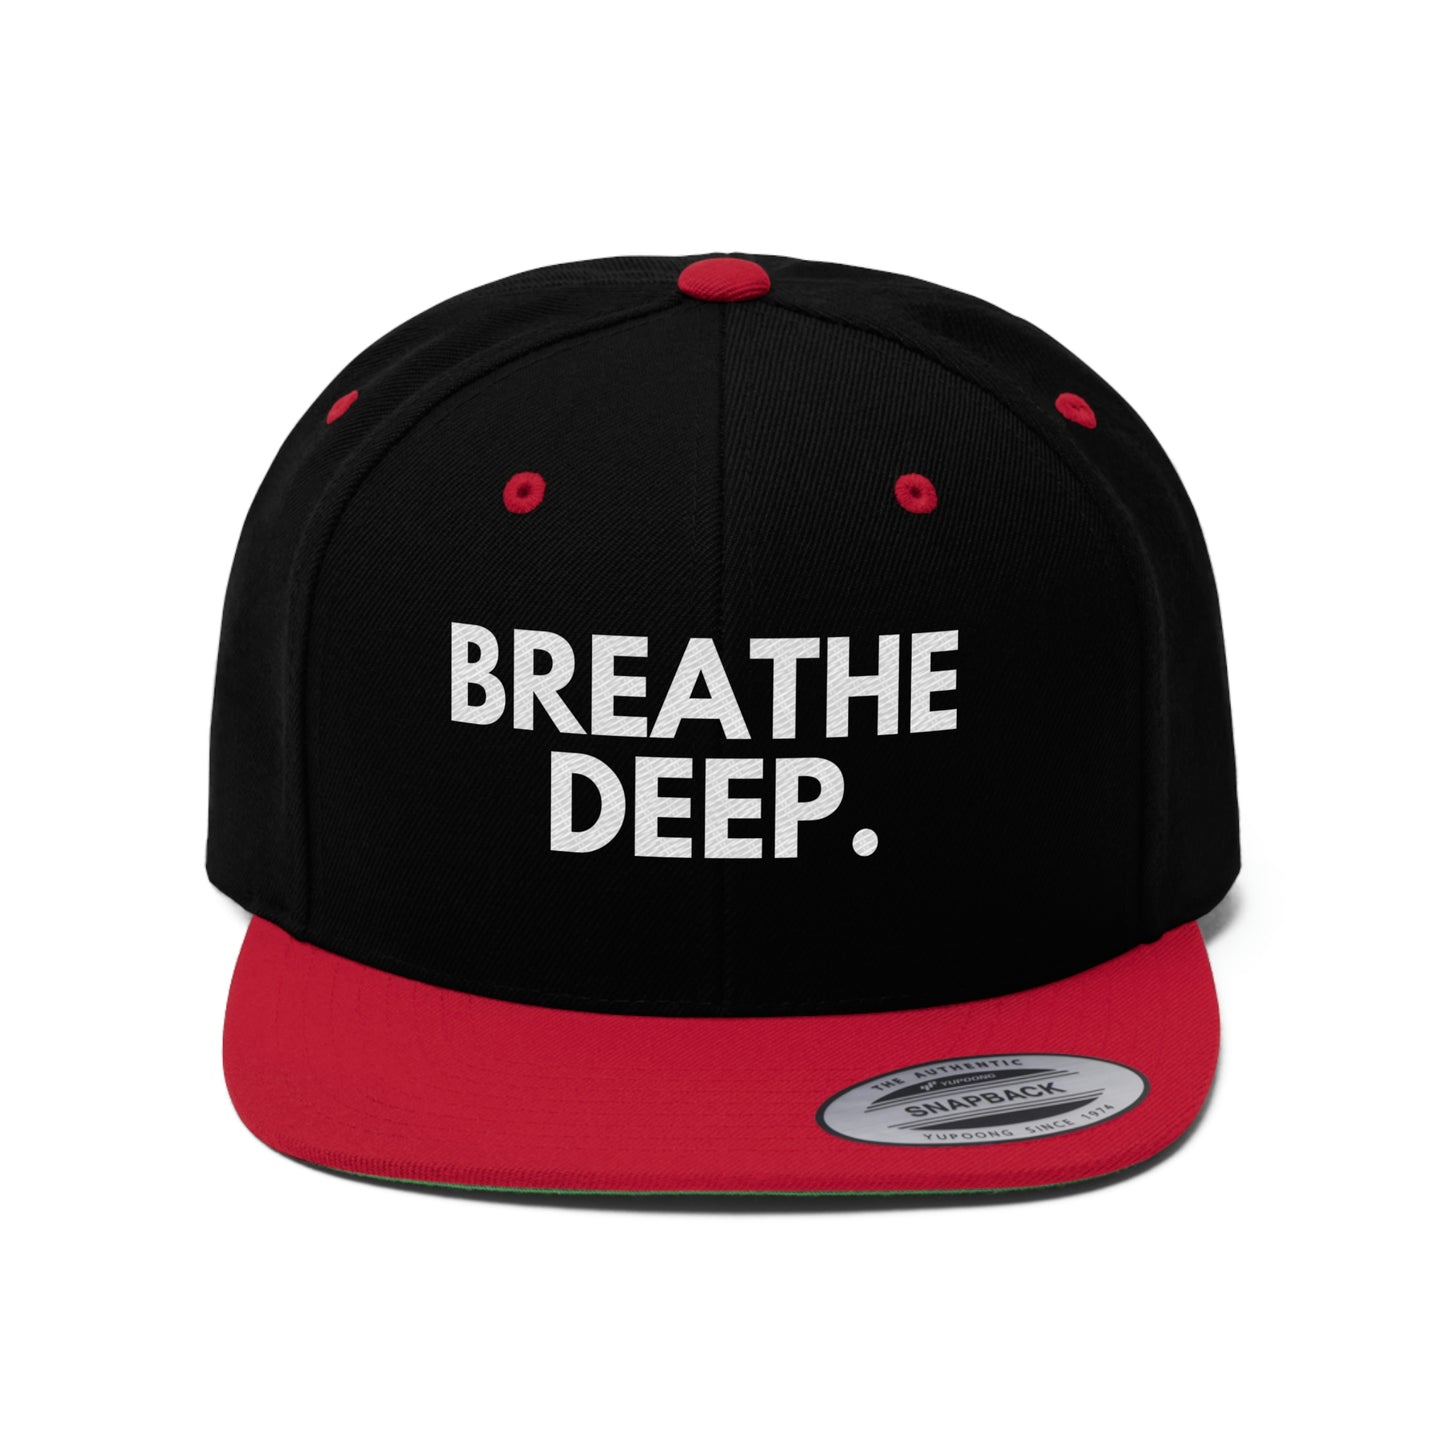 BREATHE DEEP. - Unisex Flat Bill Hat